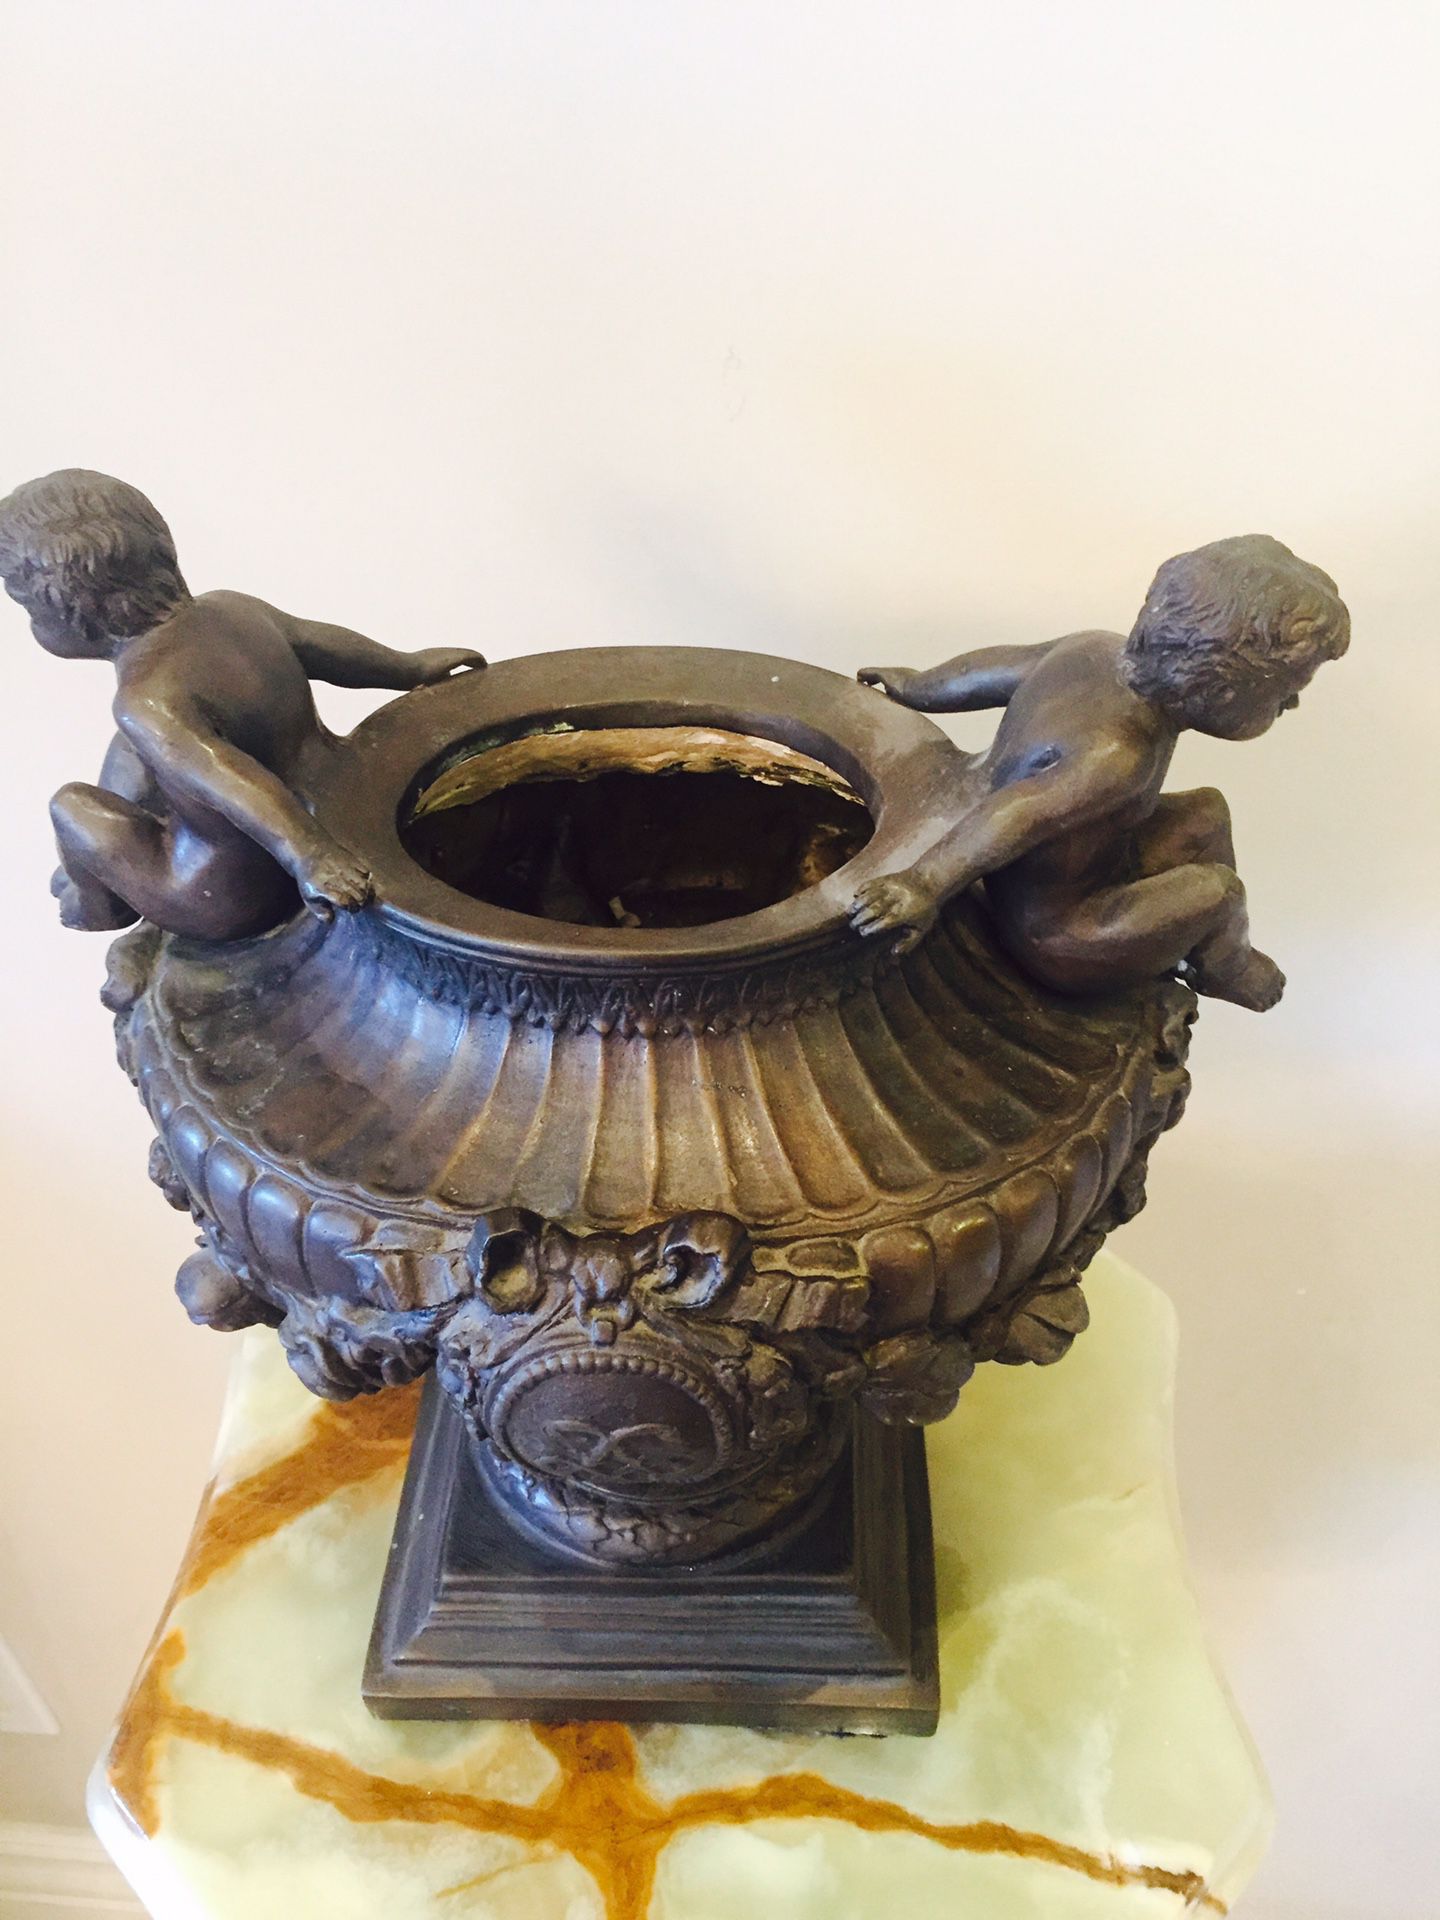 Real bronze antique bowl on pedestal. Heavy